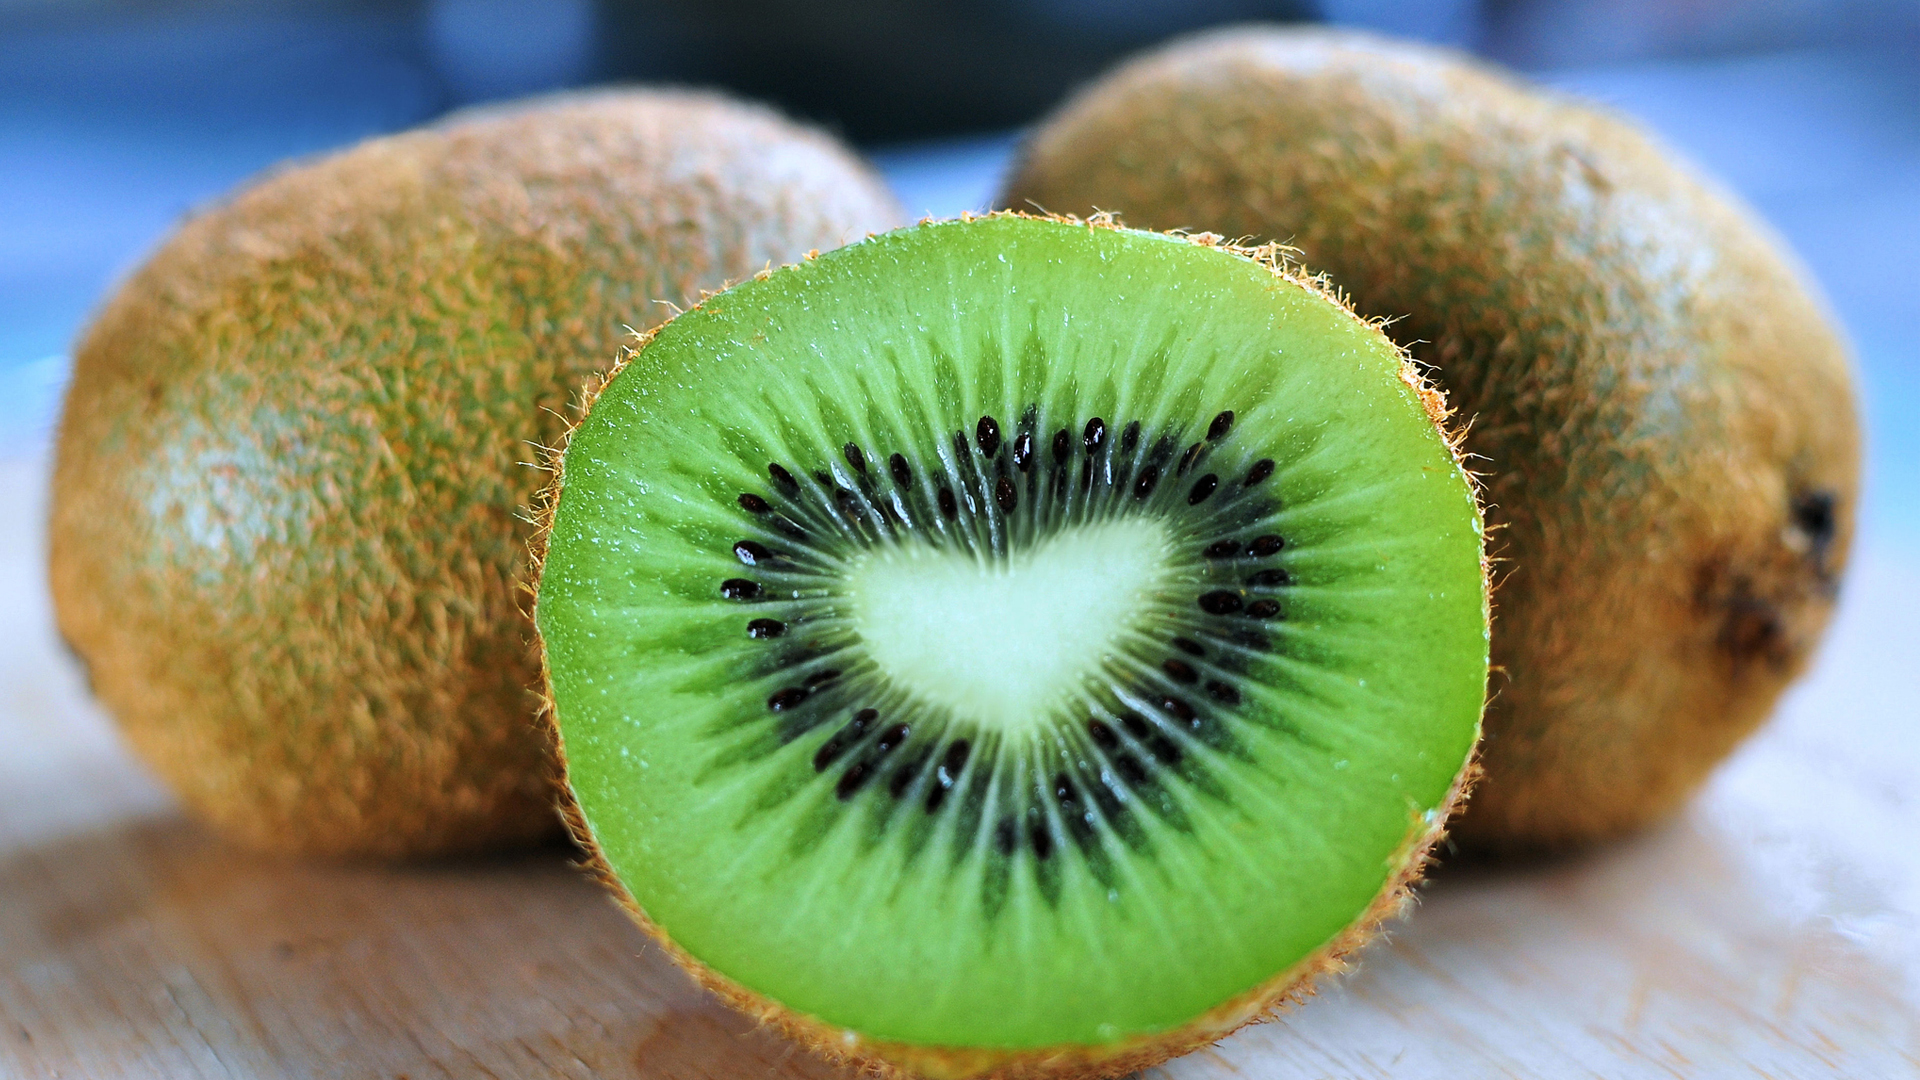 kiwi fruit with a heart shaped center